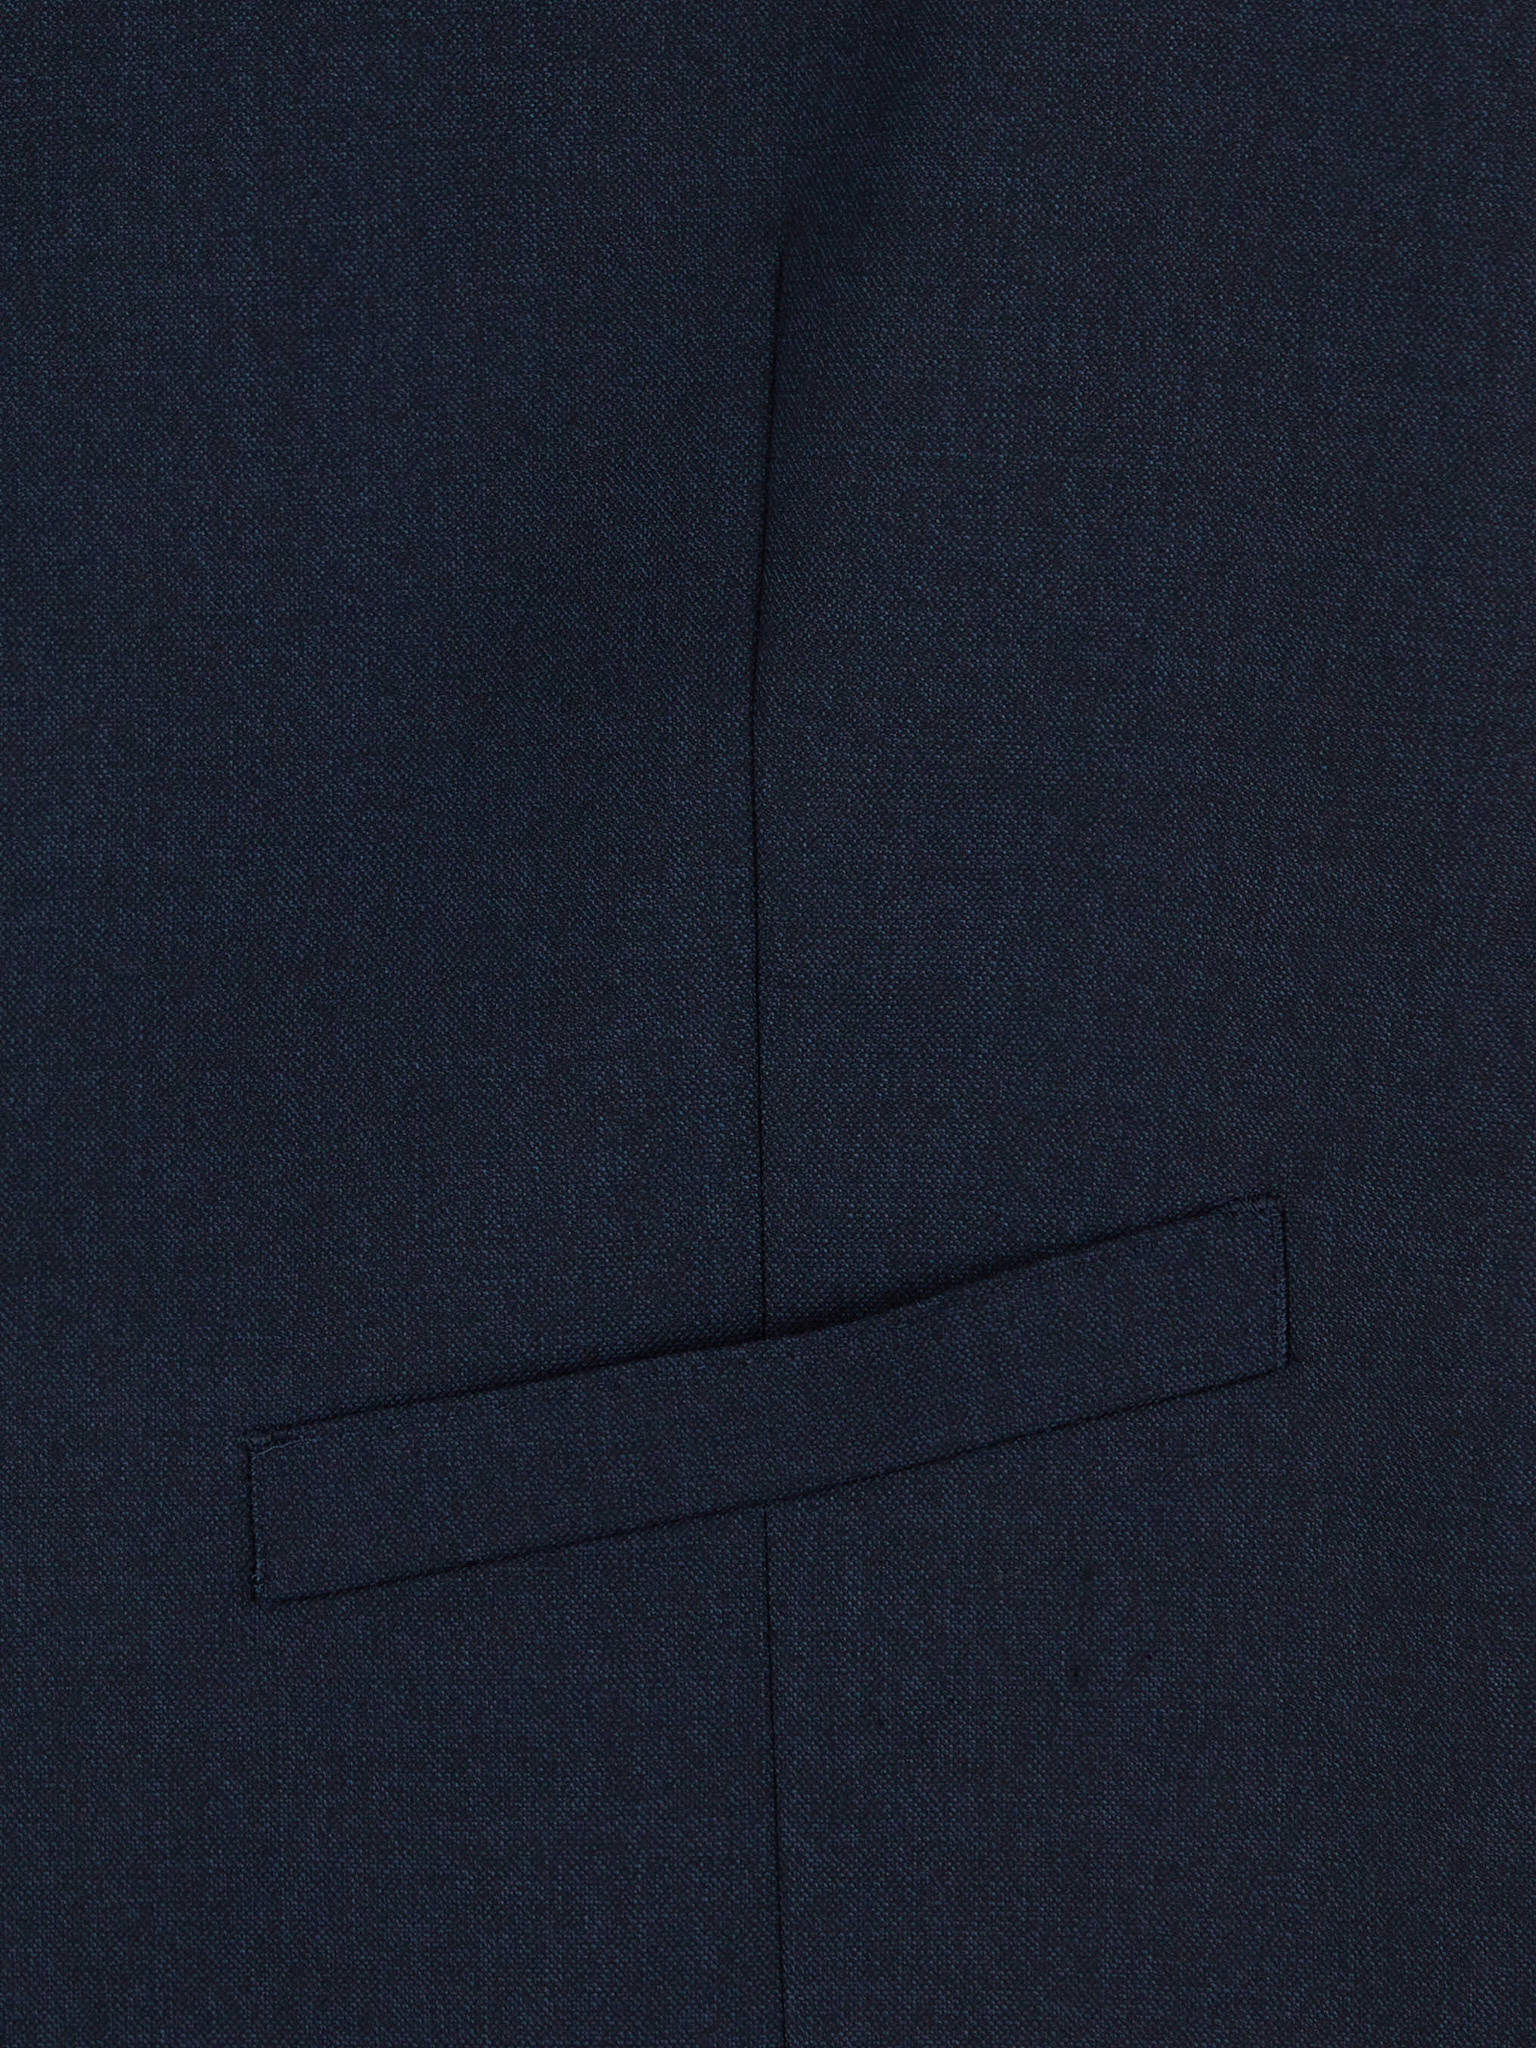 Douglas Valdino Dark Blue Mix & Match Waistcoat Regular Length